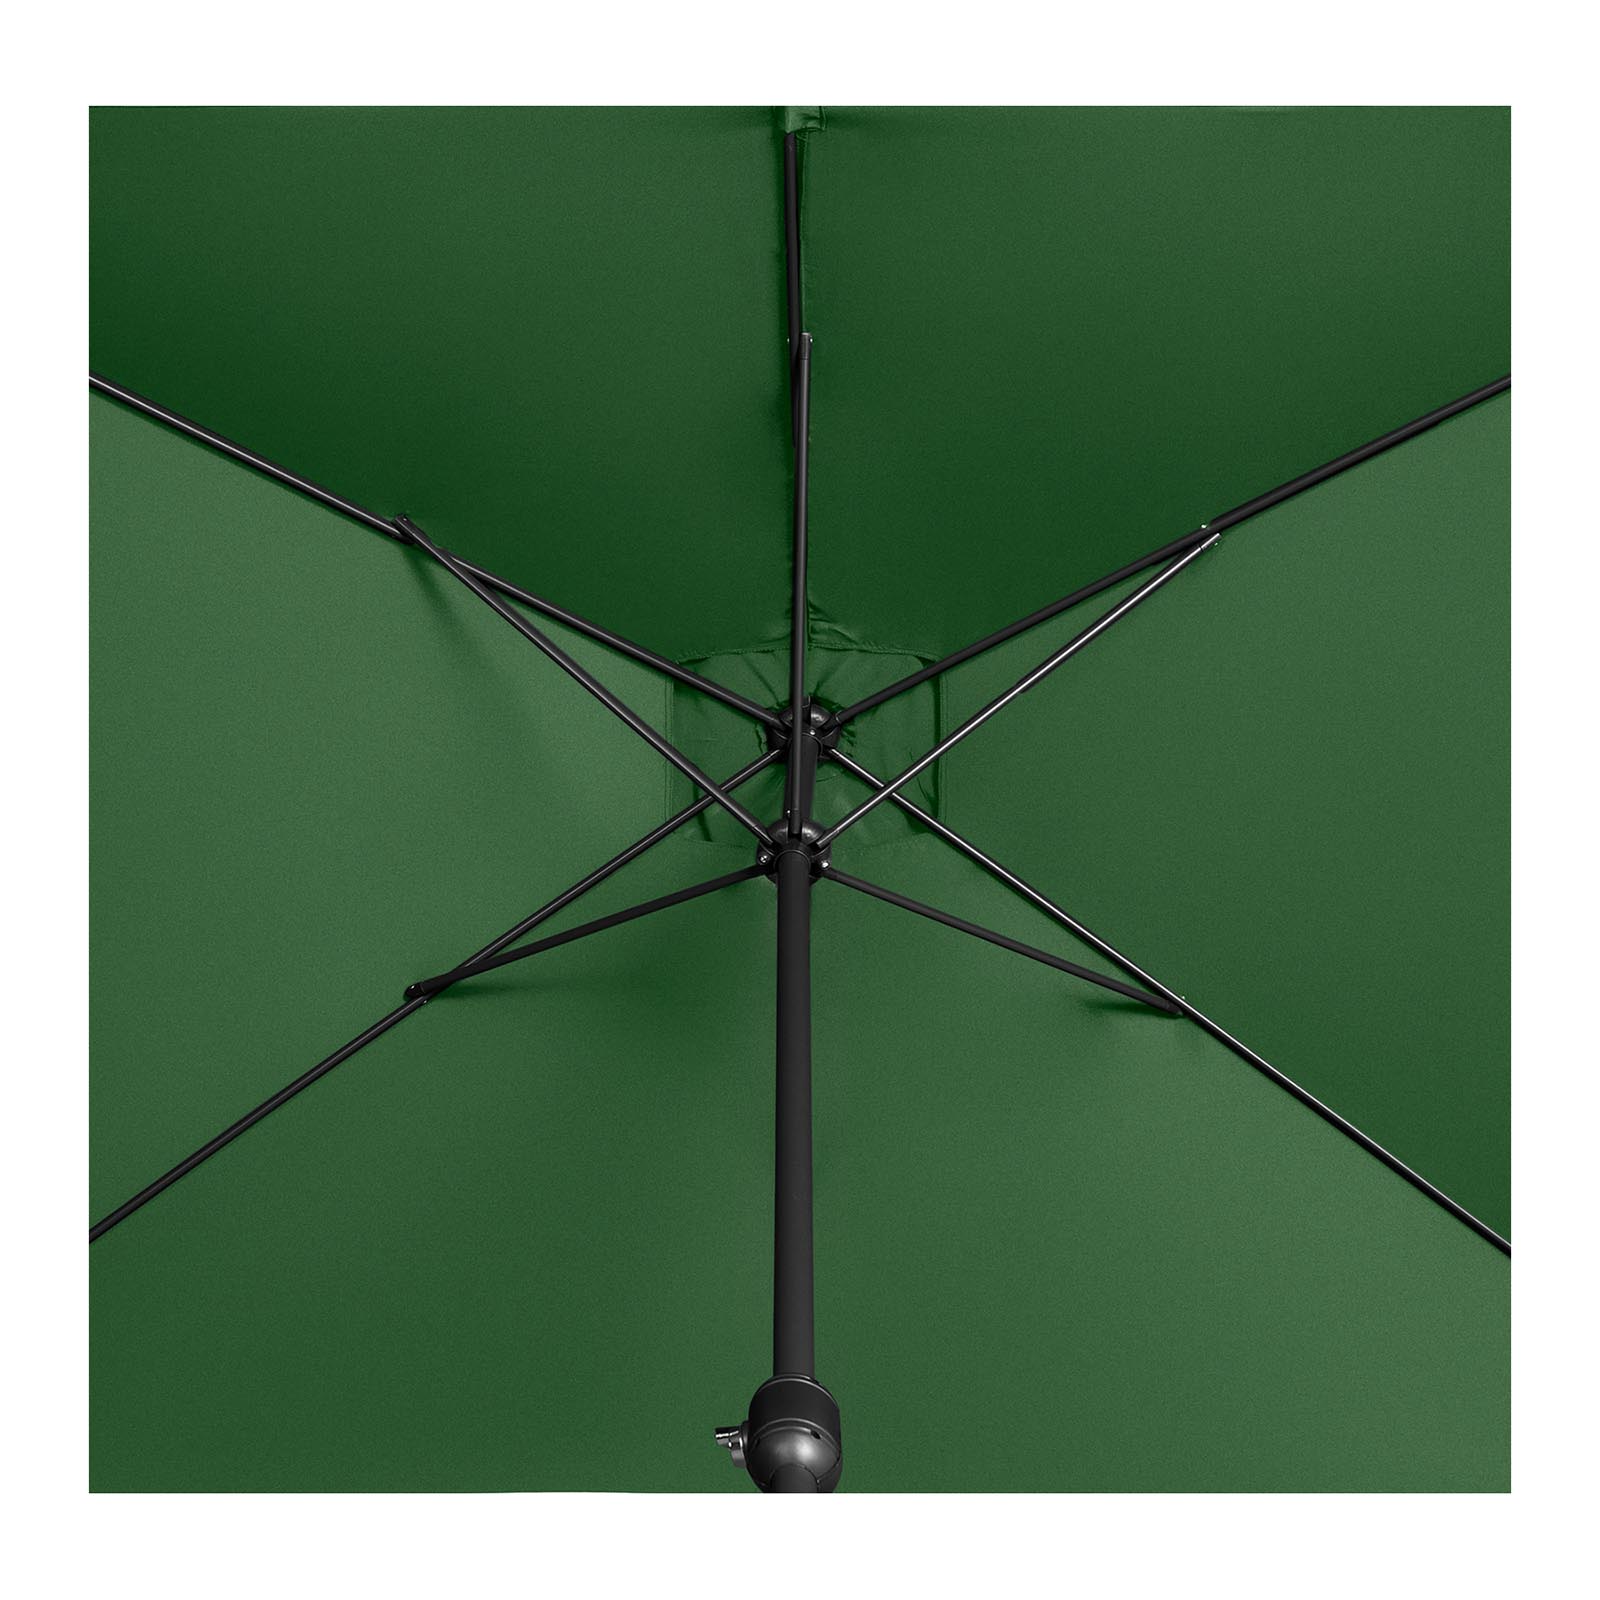 Sonnenschirm groß - grün - rechteckig - 200 x 300 cm